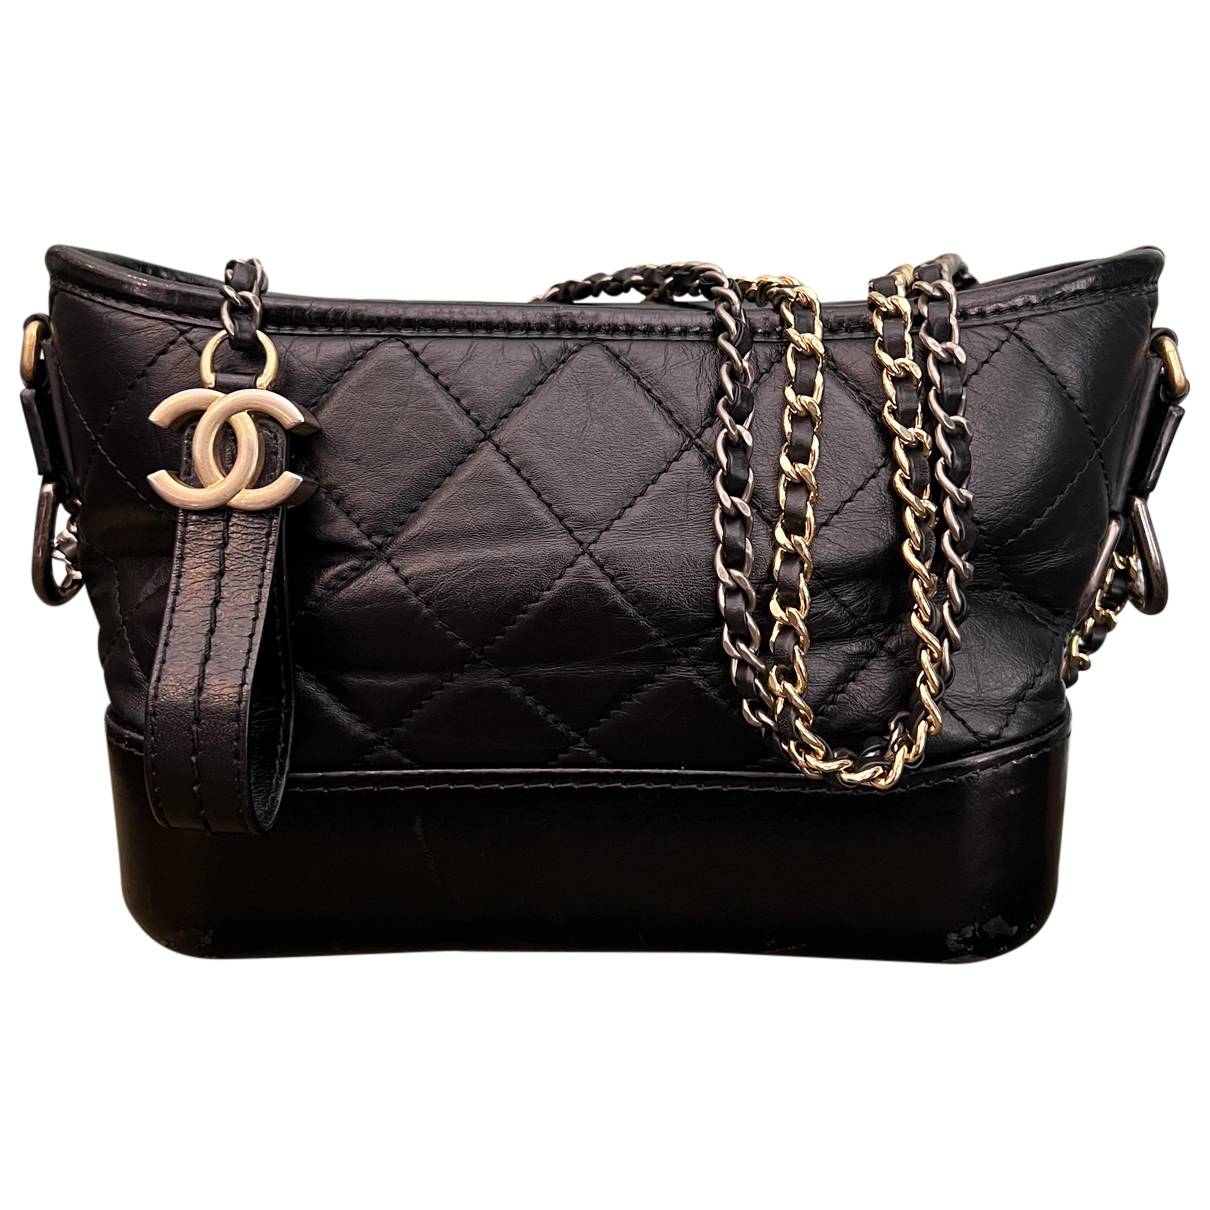 Chanel Gabrielle Handbag